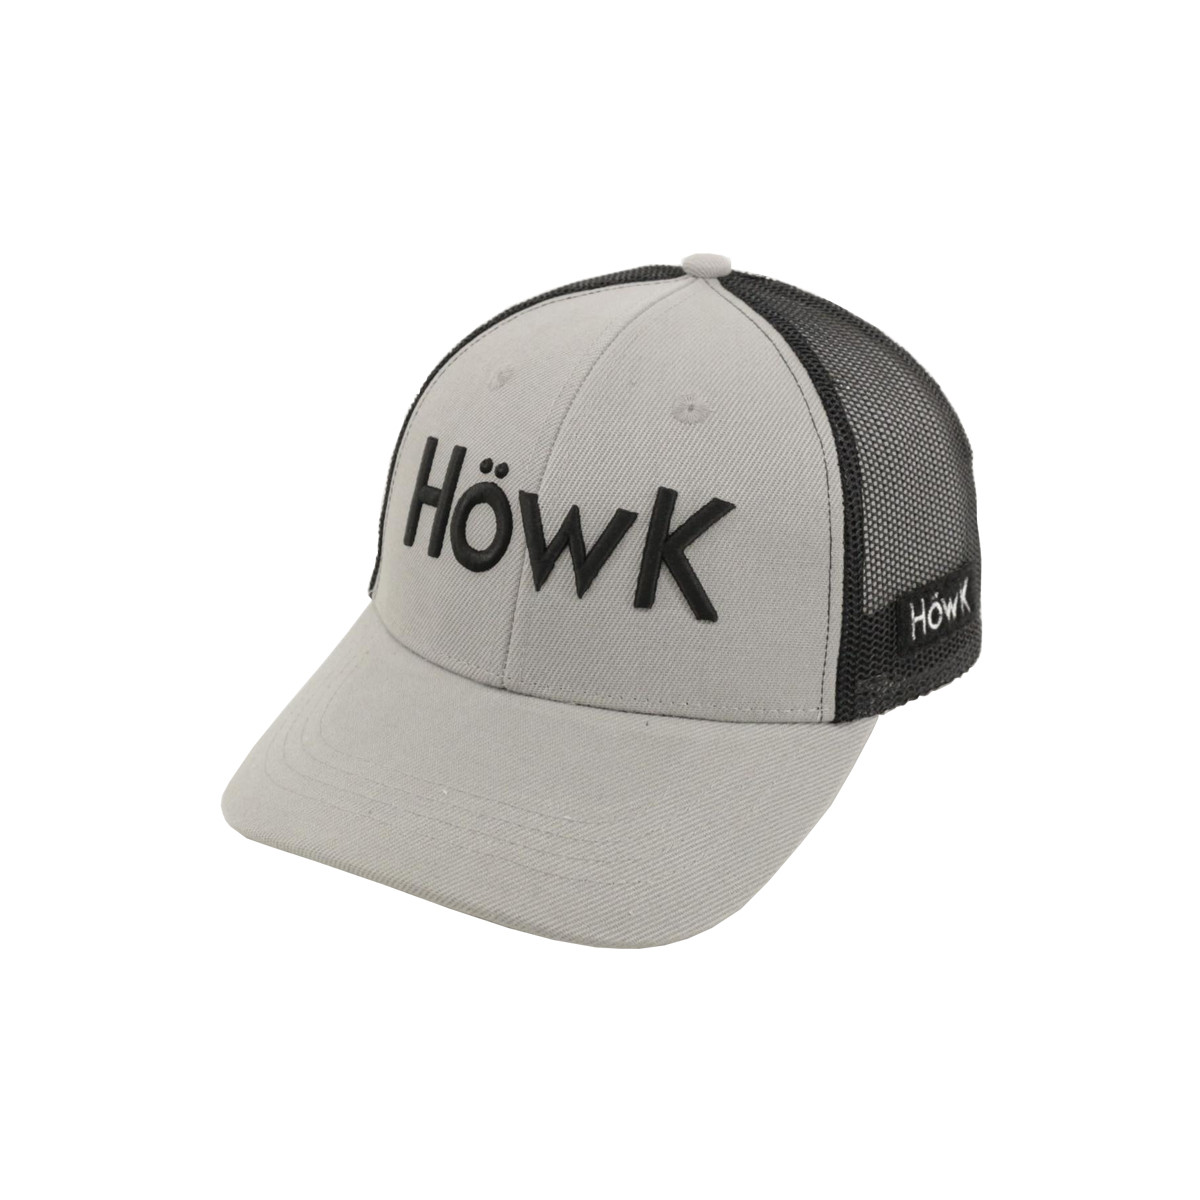 HOWK HFT CAP